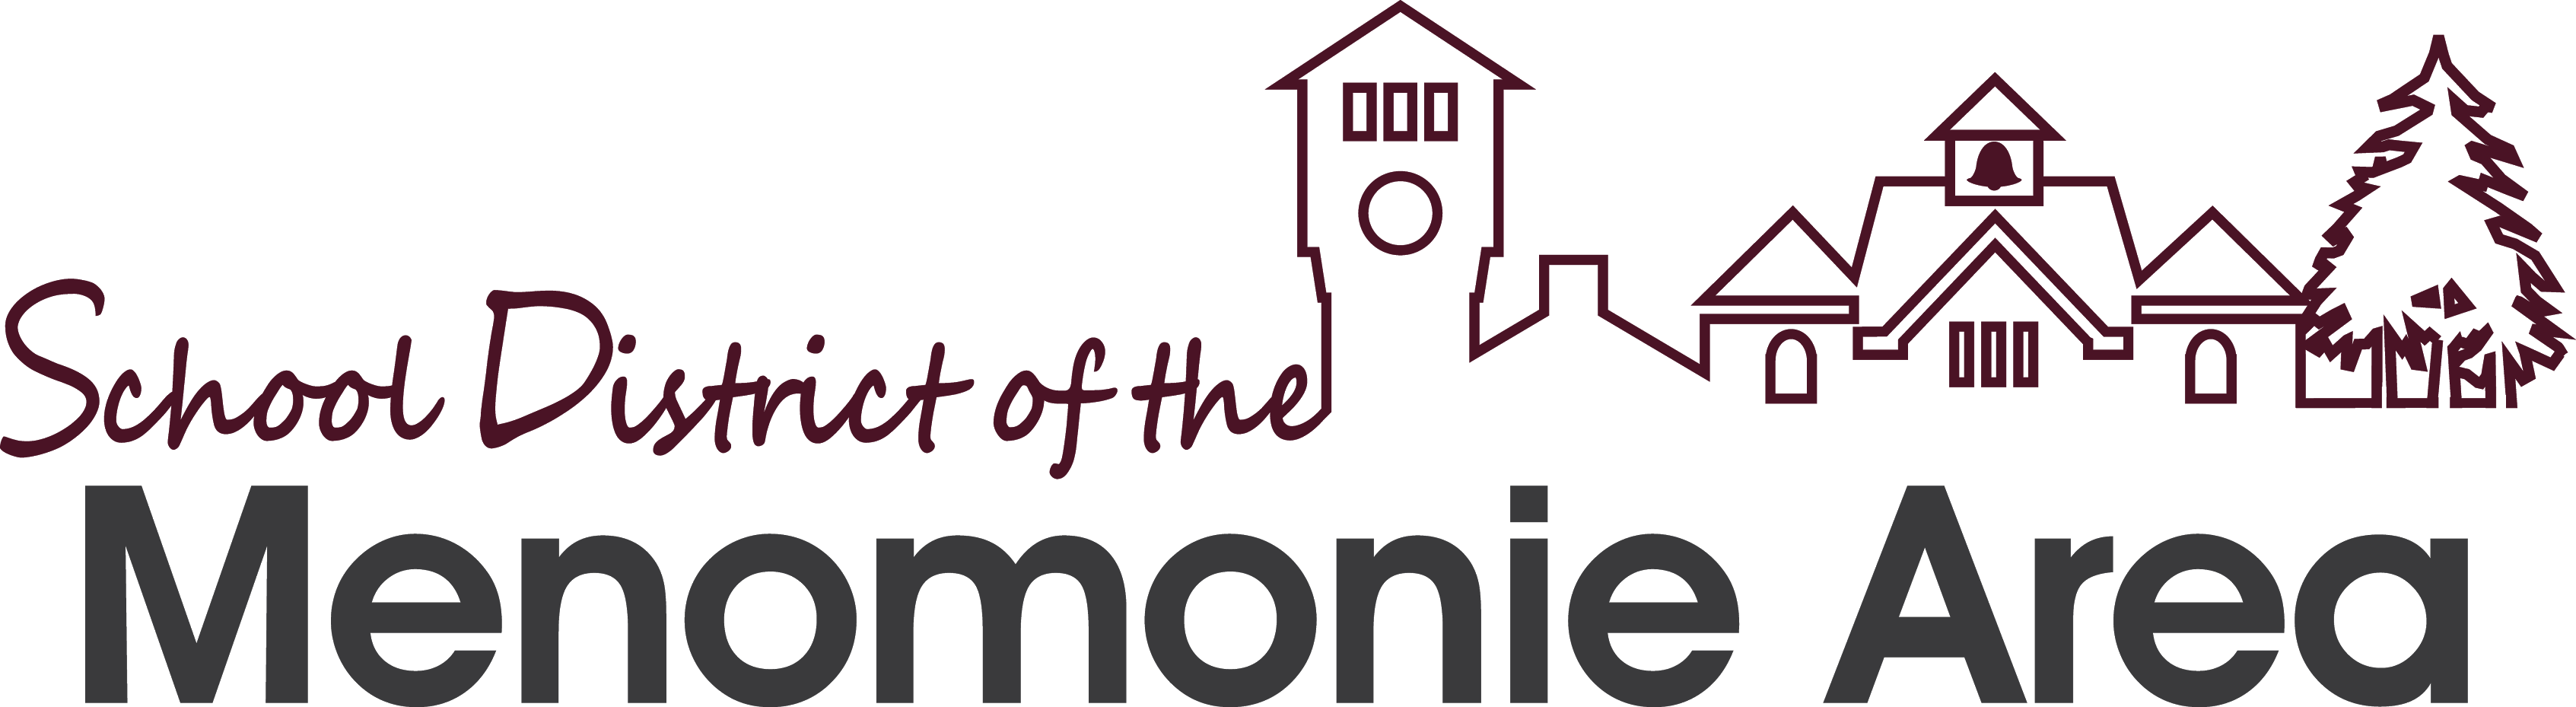 School District of the Menomonie Area's Logo